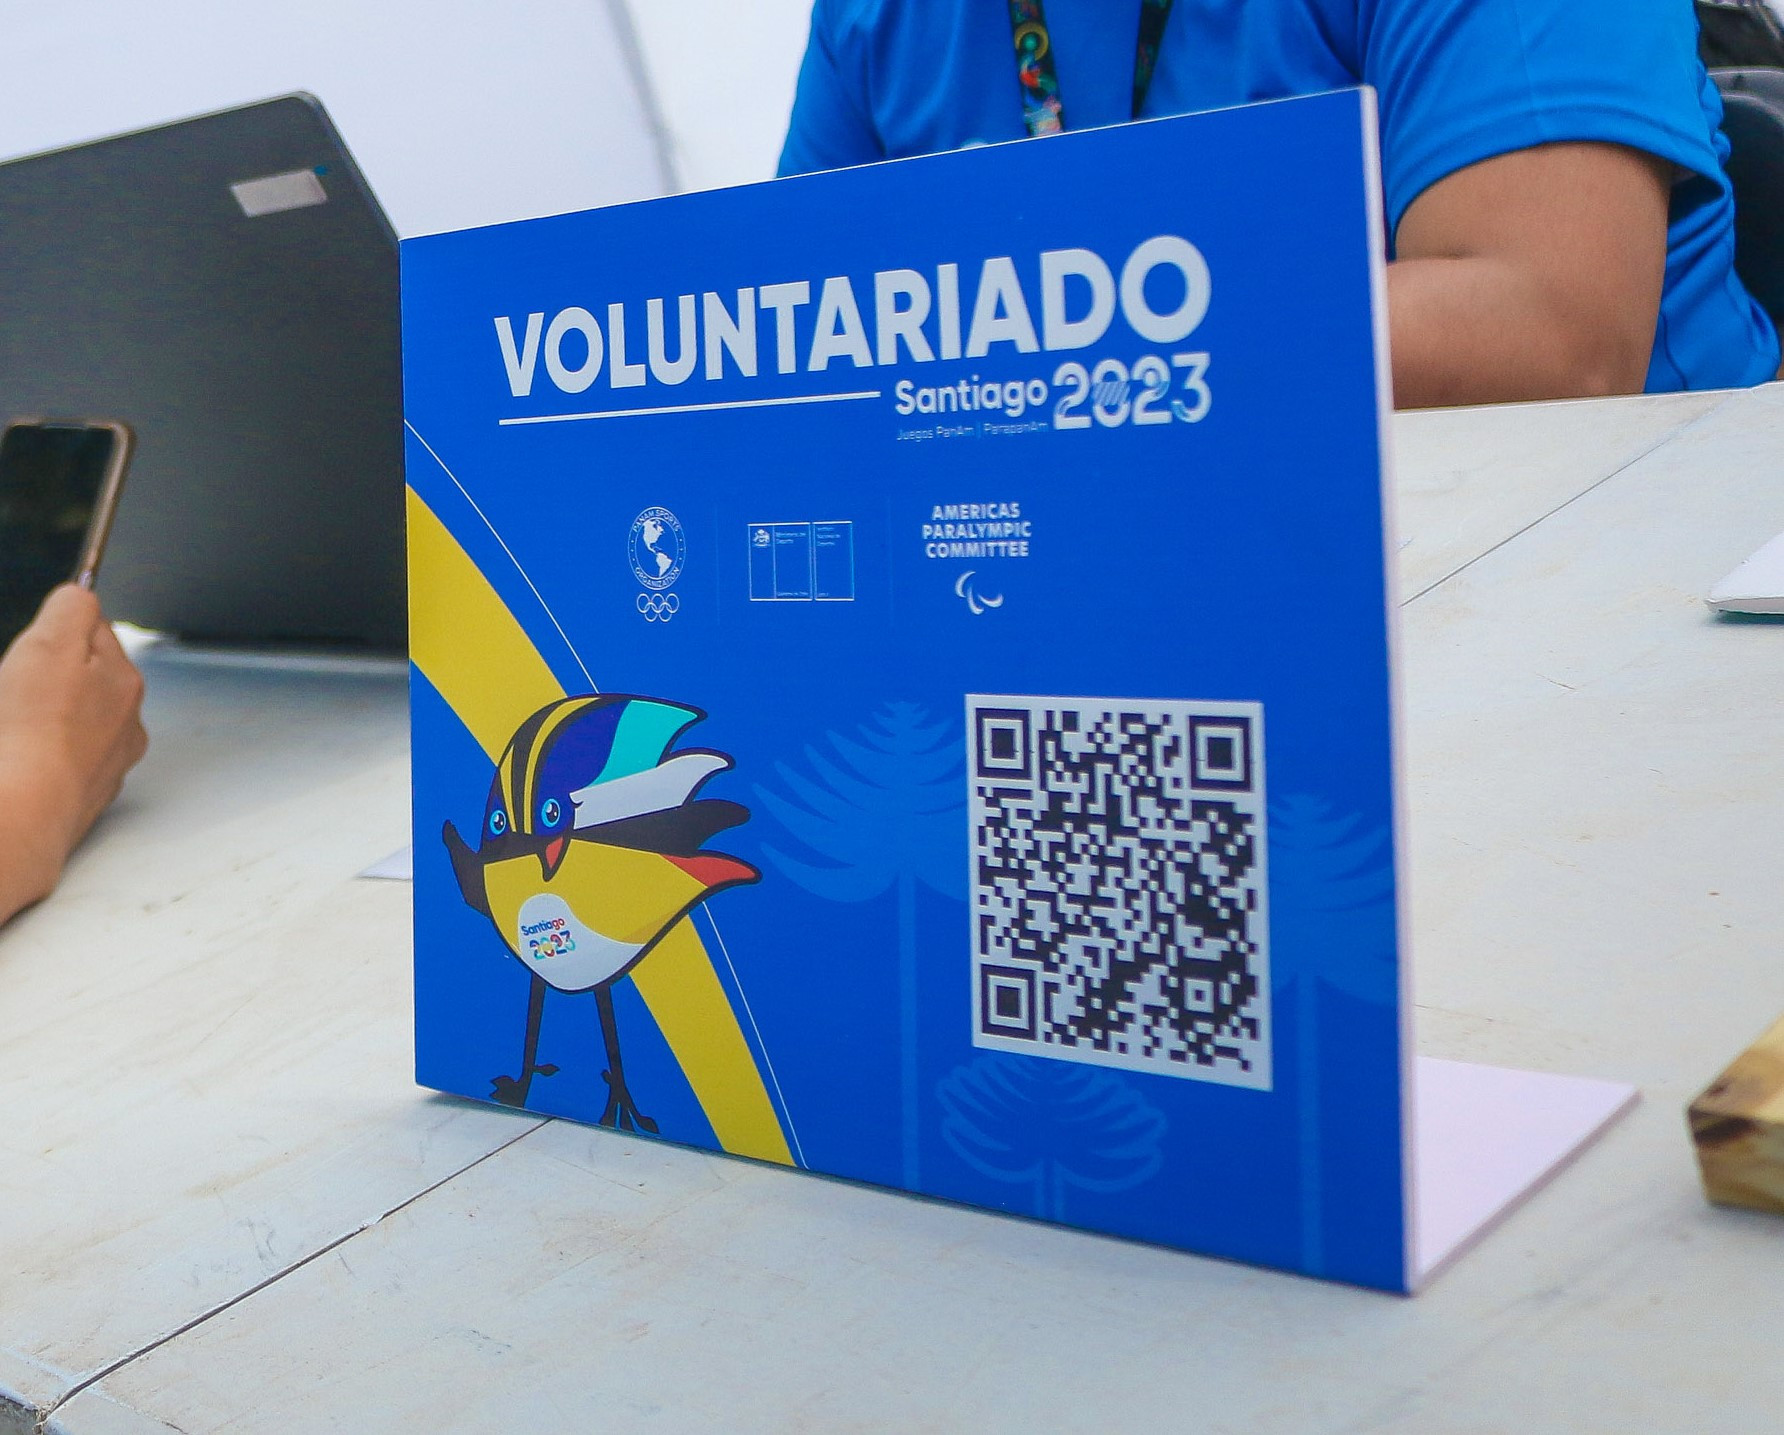 Santiago 2023 passes 10,000 volunteers registered